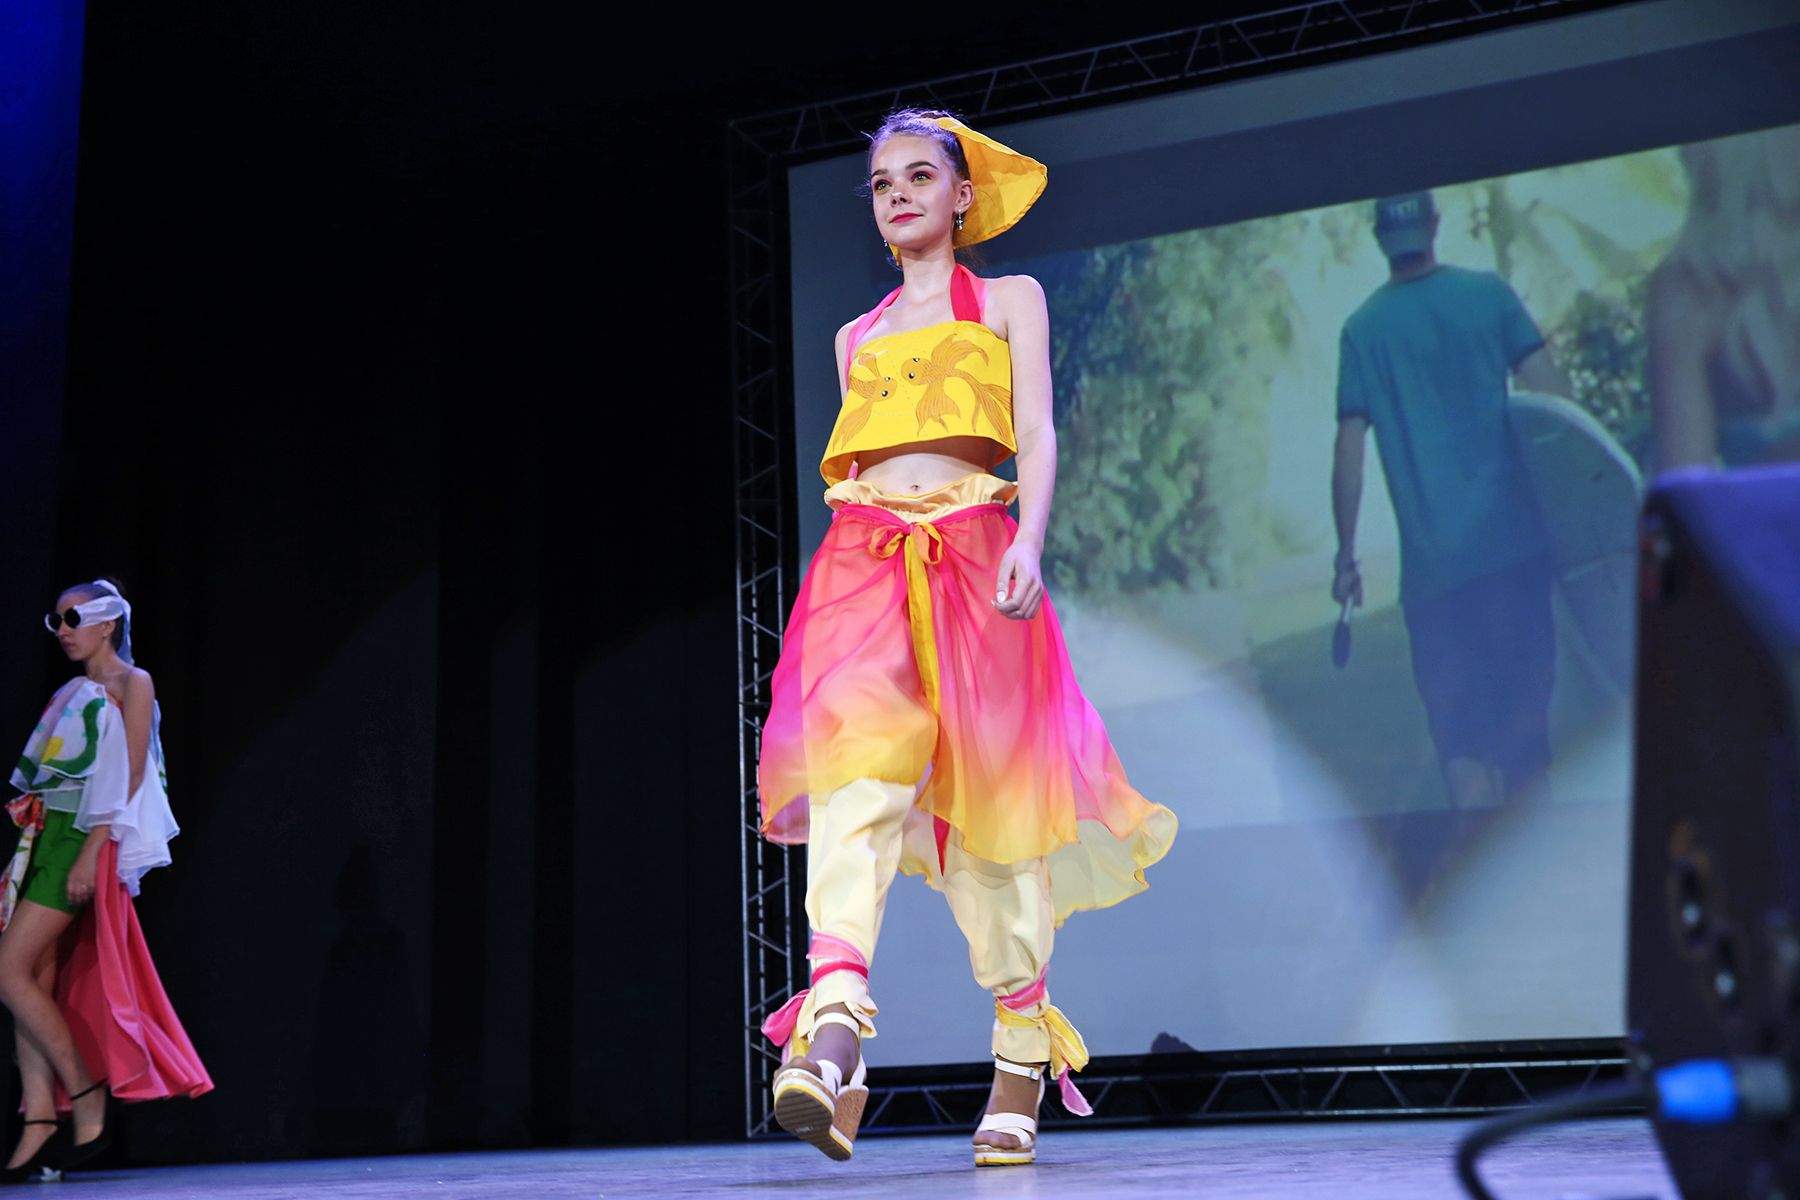 Fashion-перформанс за 2 минуты. «Мода без границ» ВГУЭС удивляет и вдохновляет